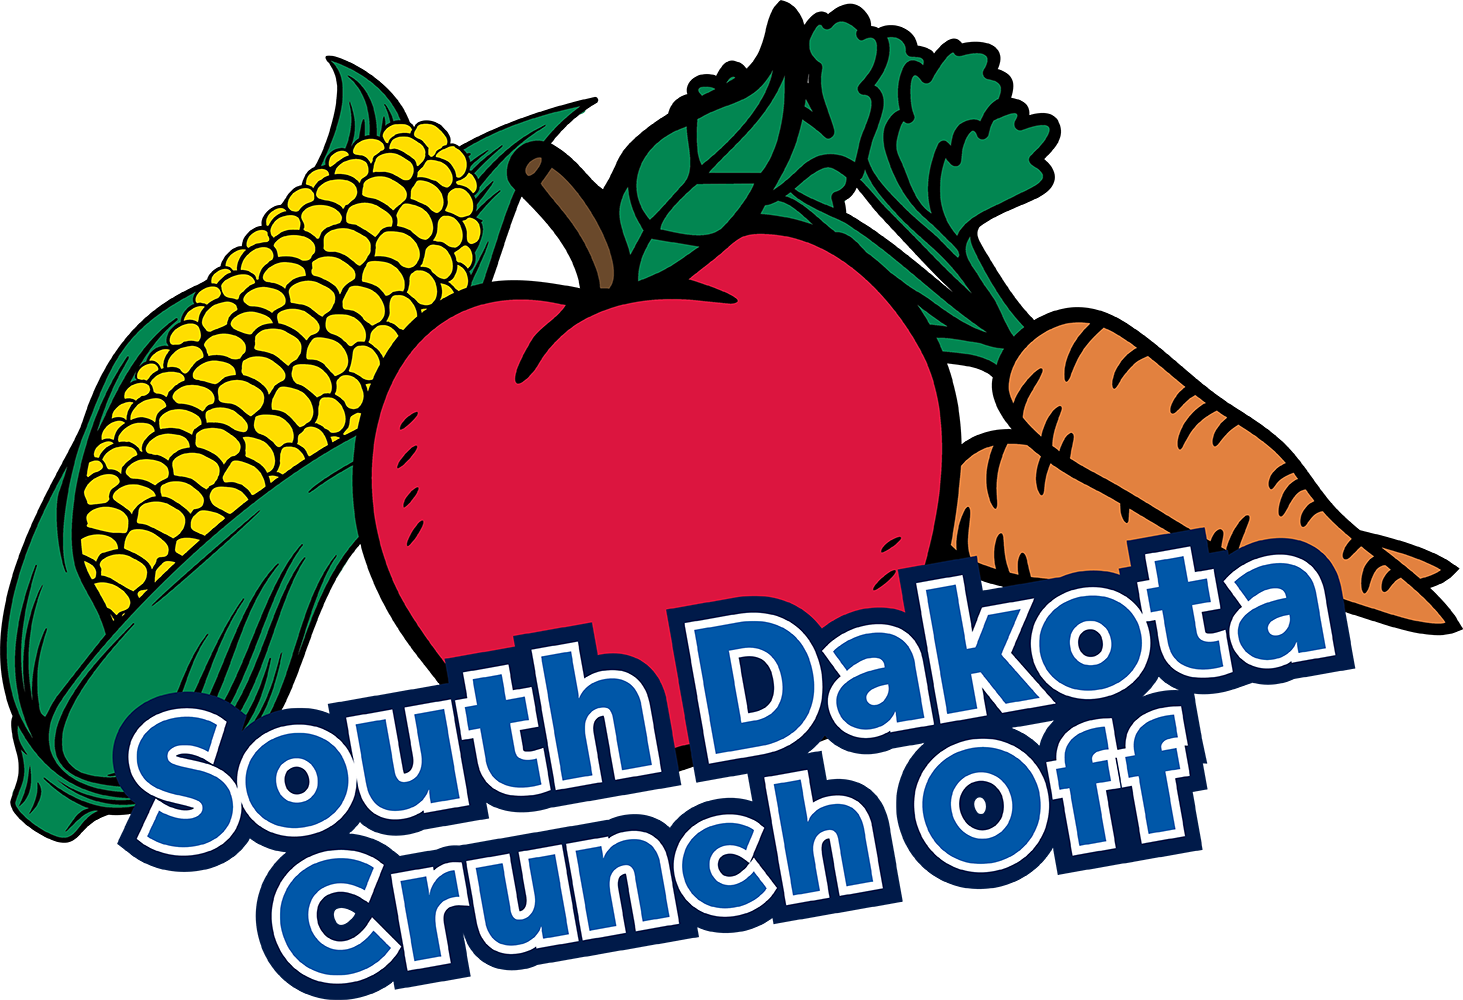 South Dakota Crunch Off